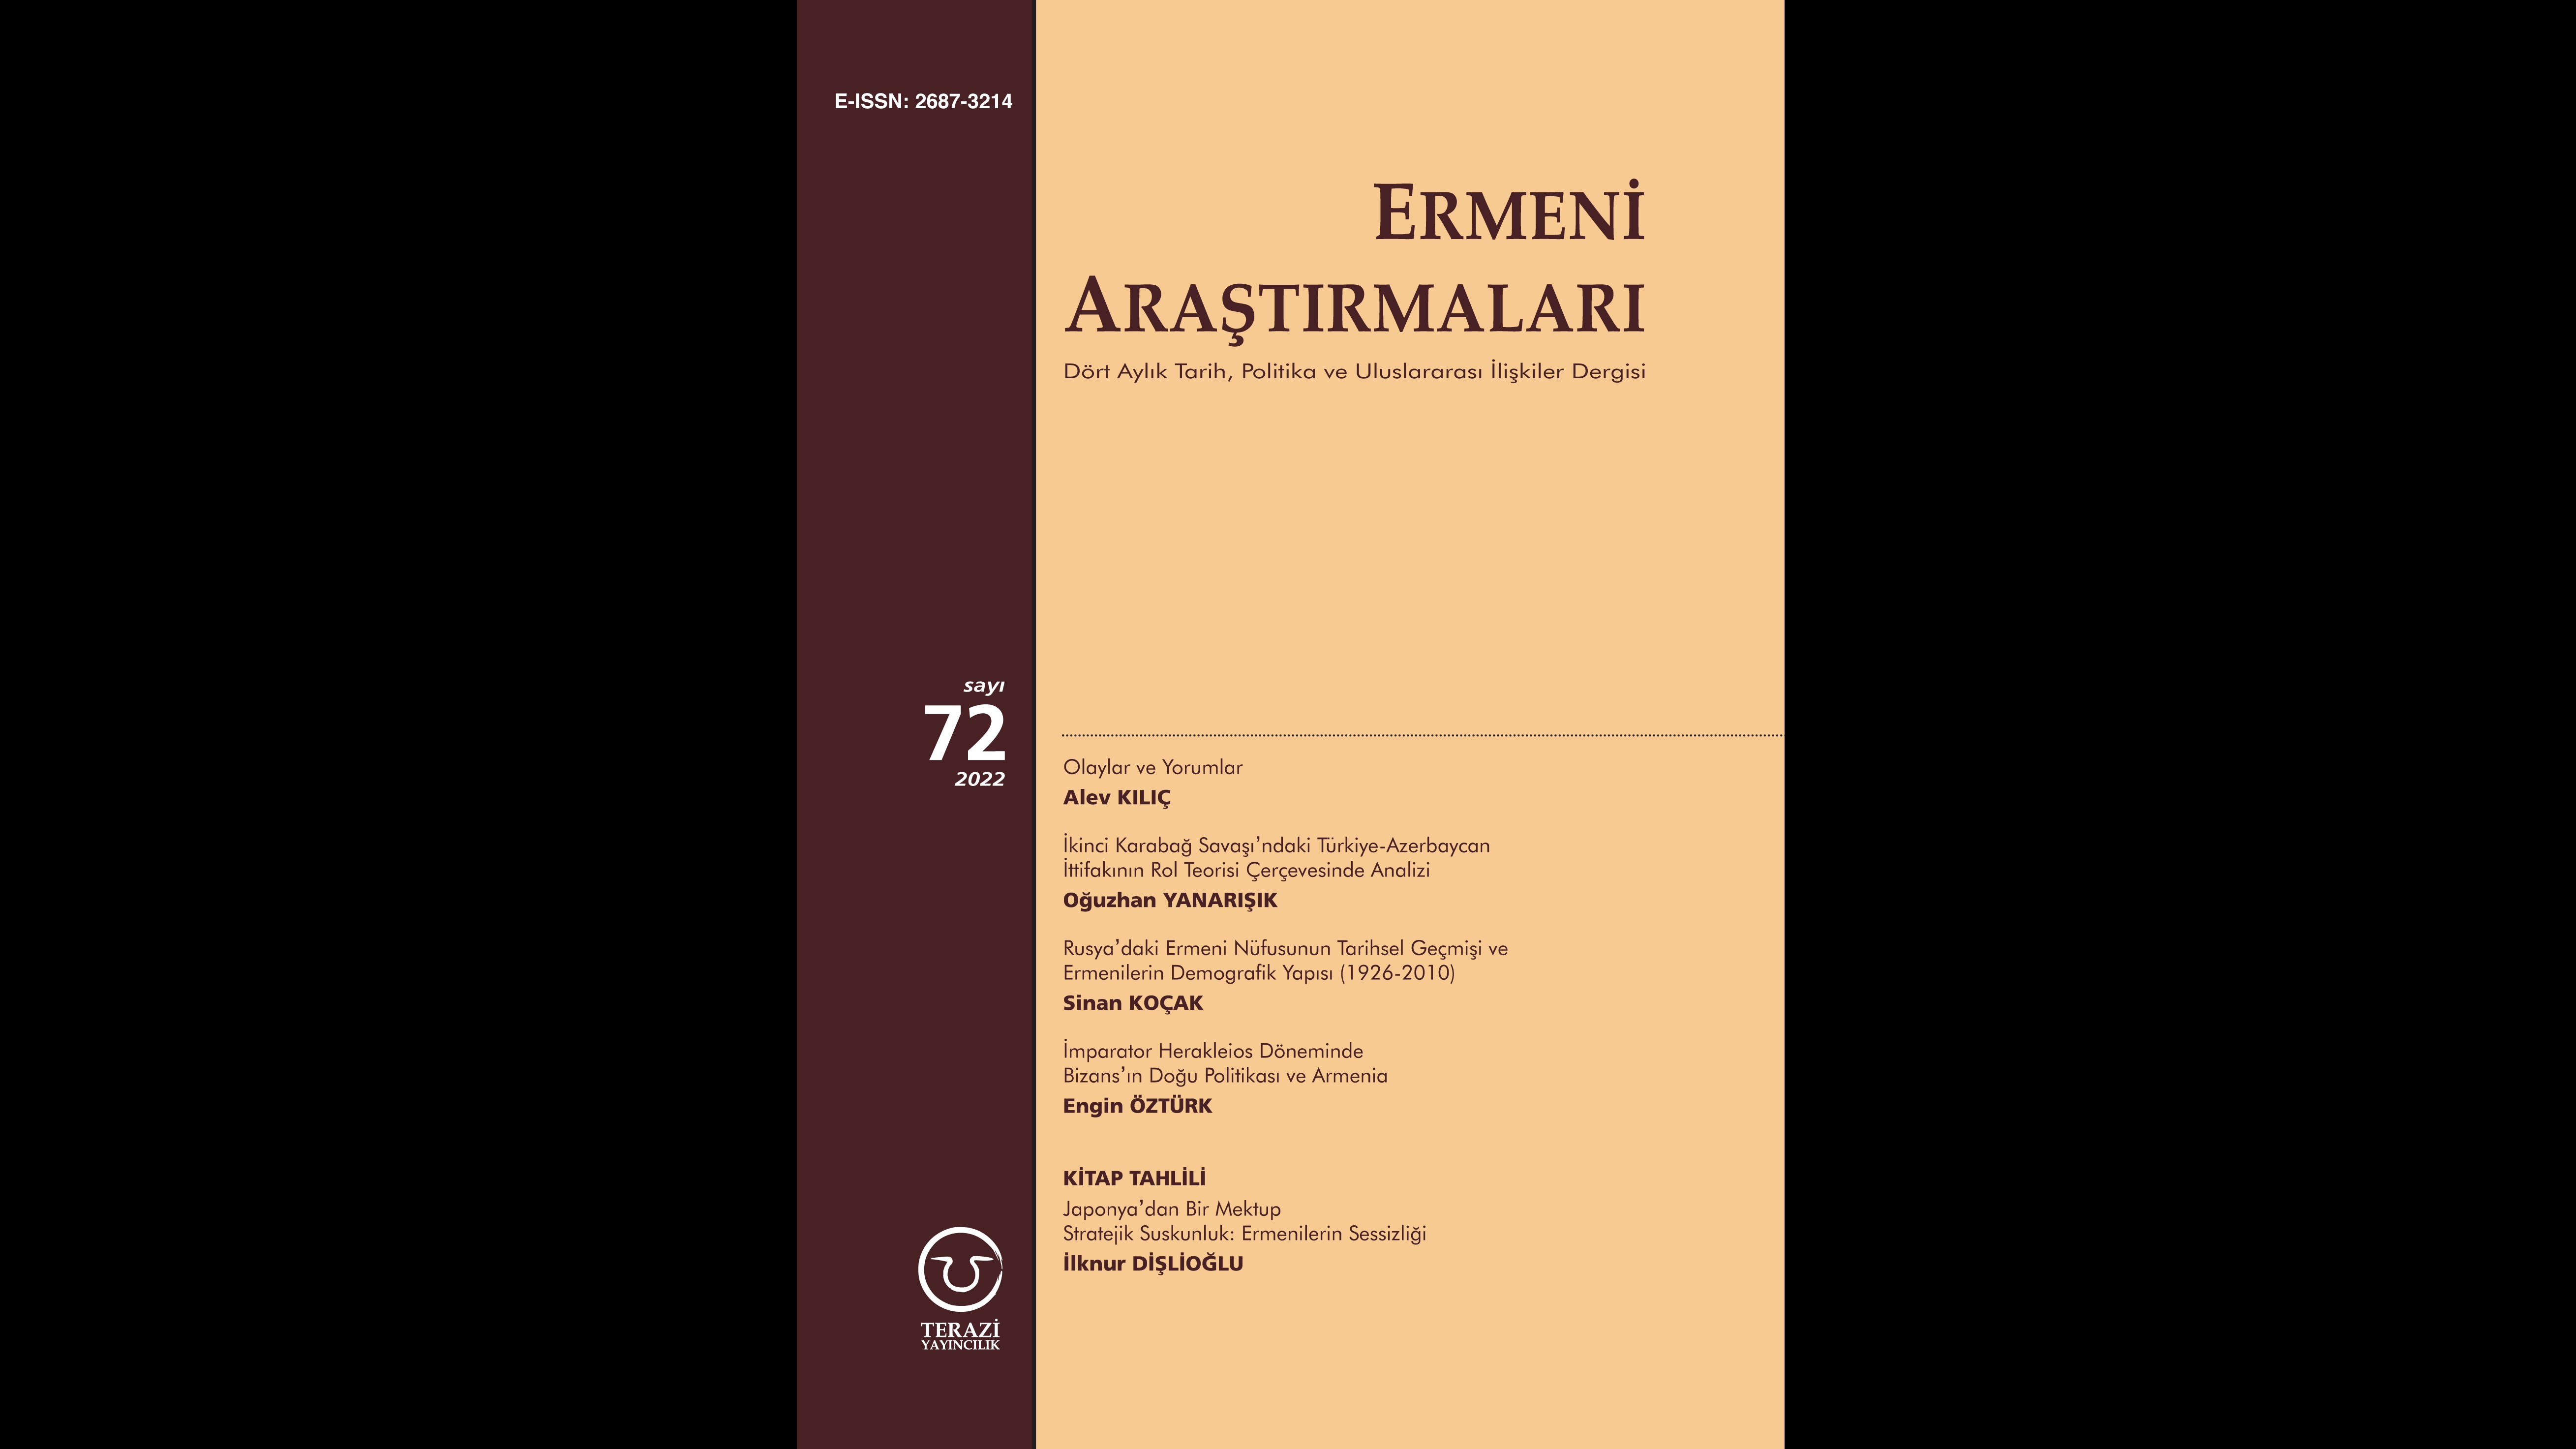 ANNOUNCEMENT: 72ND ISSUE OF ERMENI ARAŞTIRMALARI JOURNAL HAS BEEN PUBLISHED